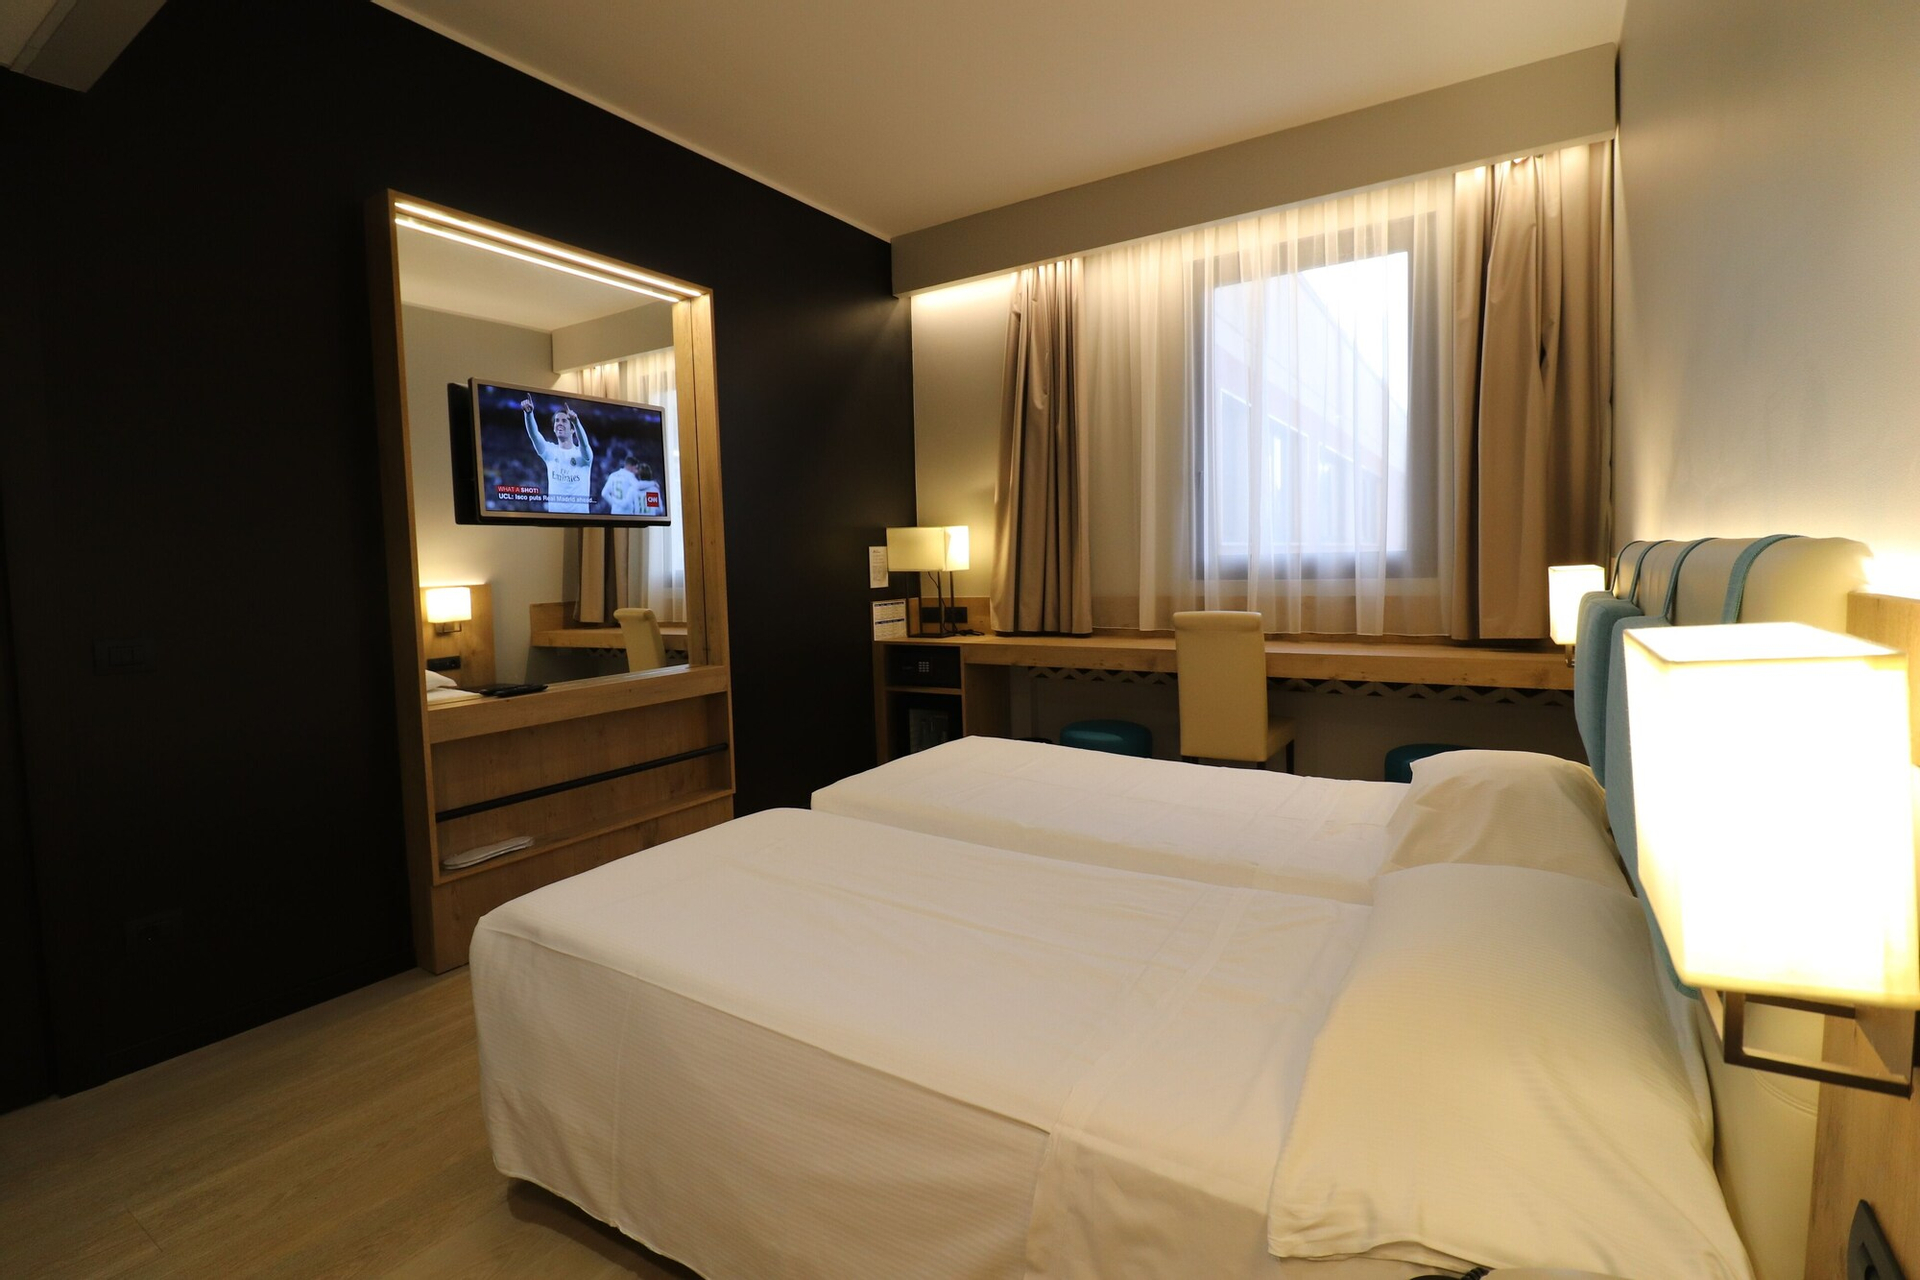 Bedroom 2, Hotel Domenichino, Milano